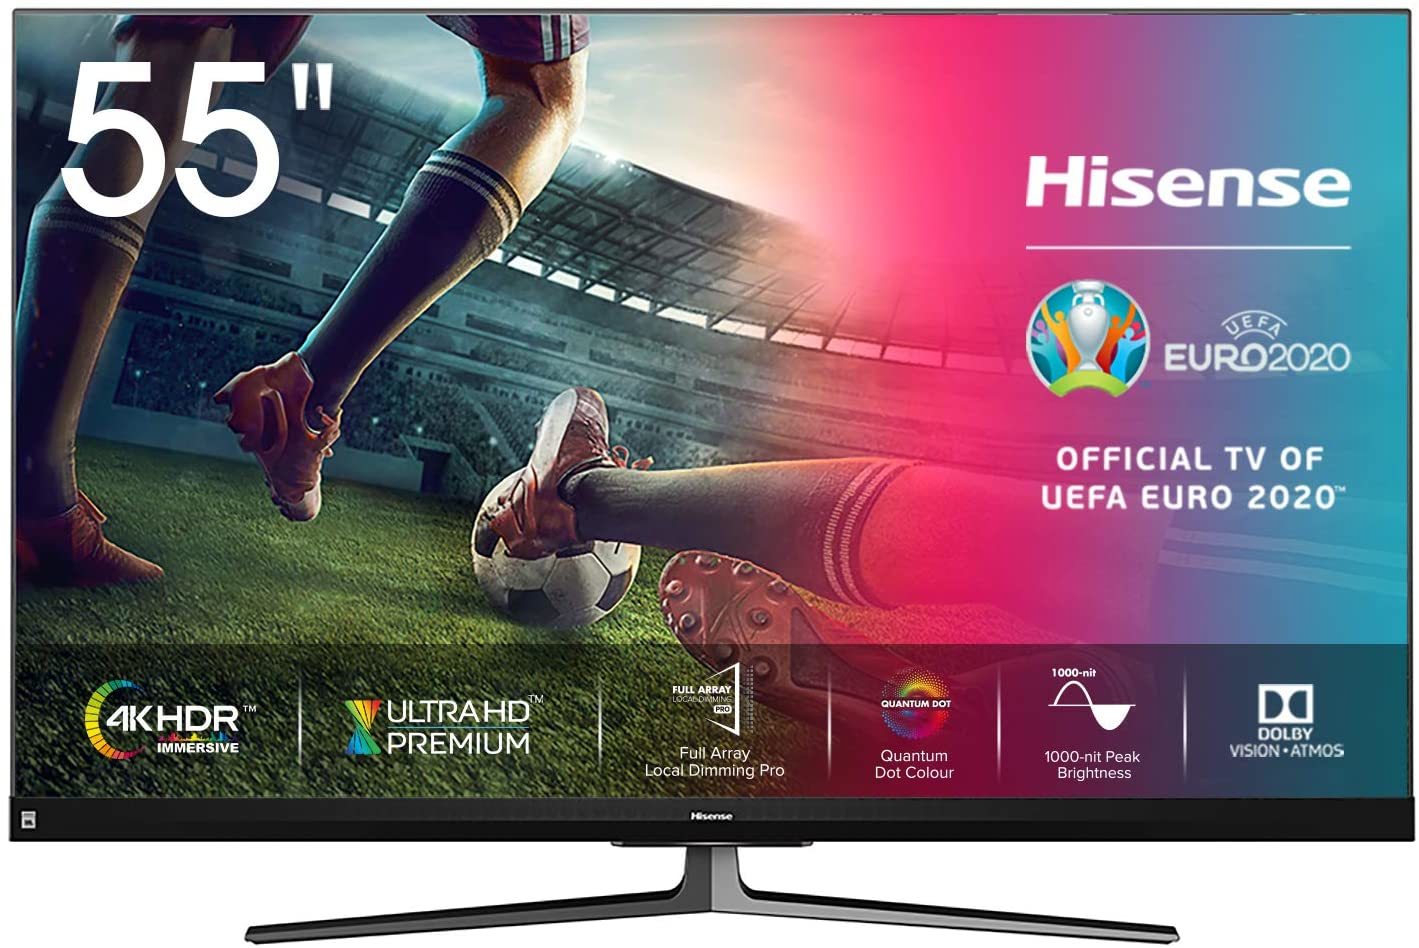 18++ 55 inch smart tv price in uae information